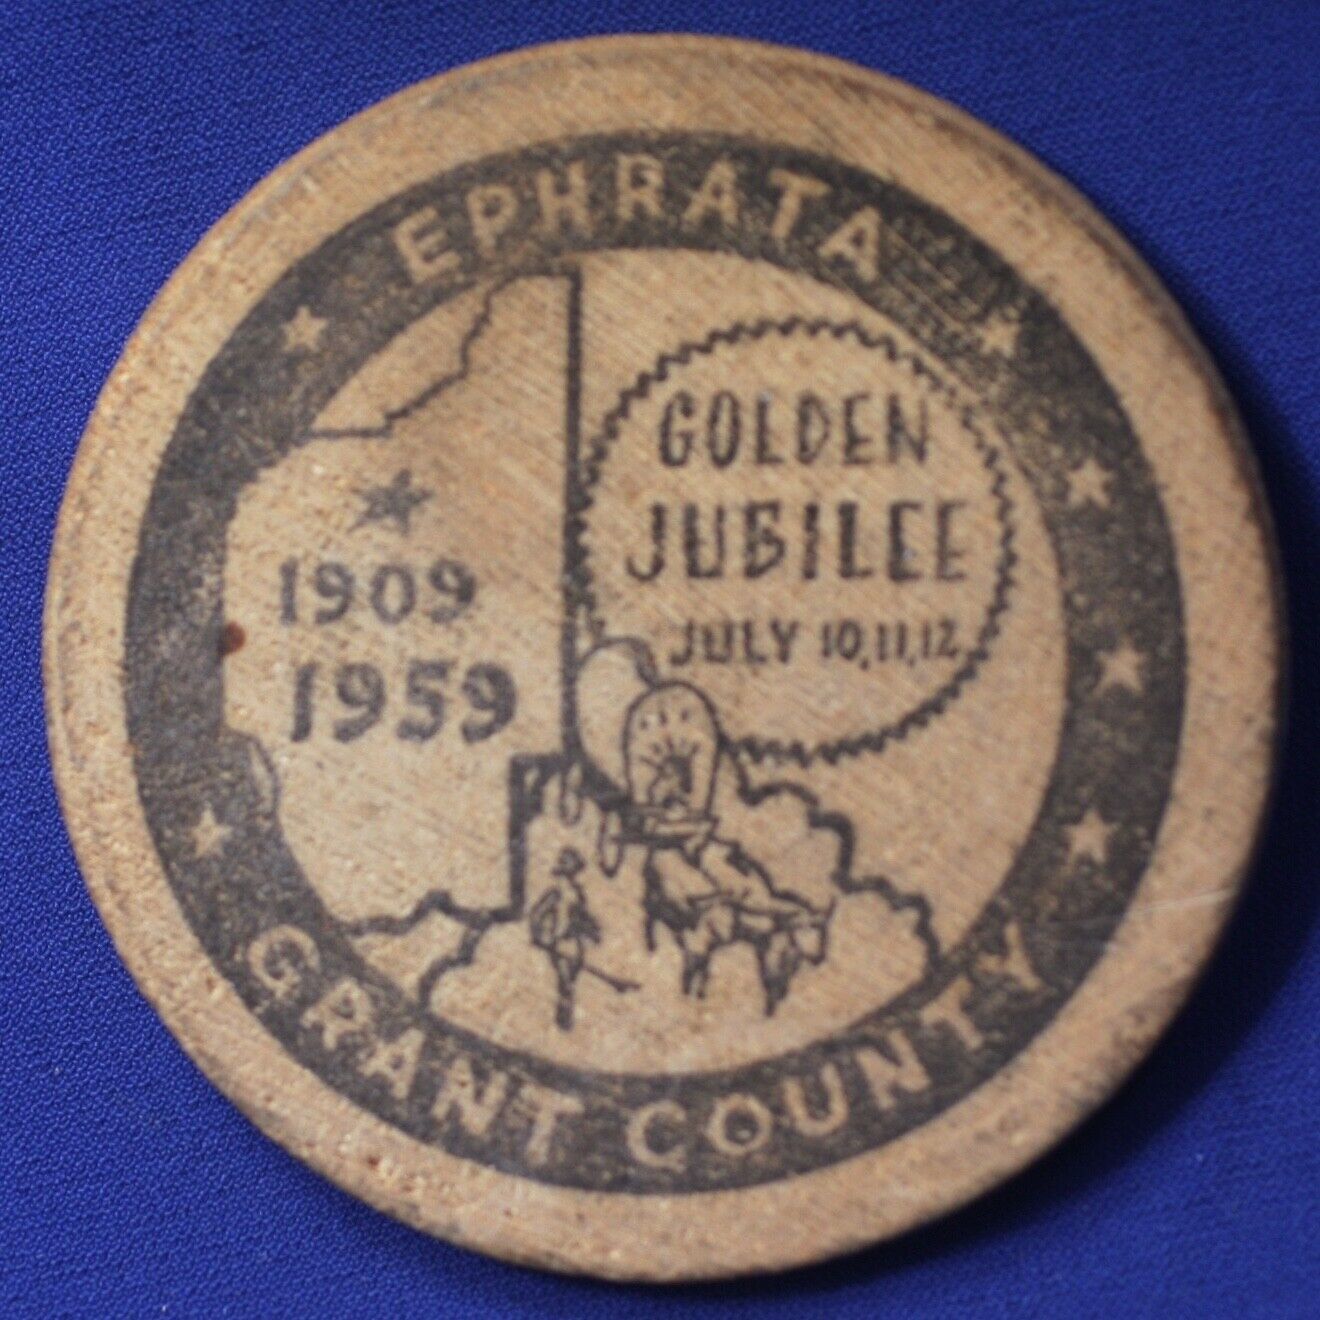 1959 Ephrata Washington Grant County Golden Jubilee 5¢ Wooden Nickel TC-657416